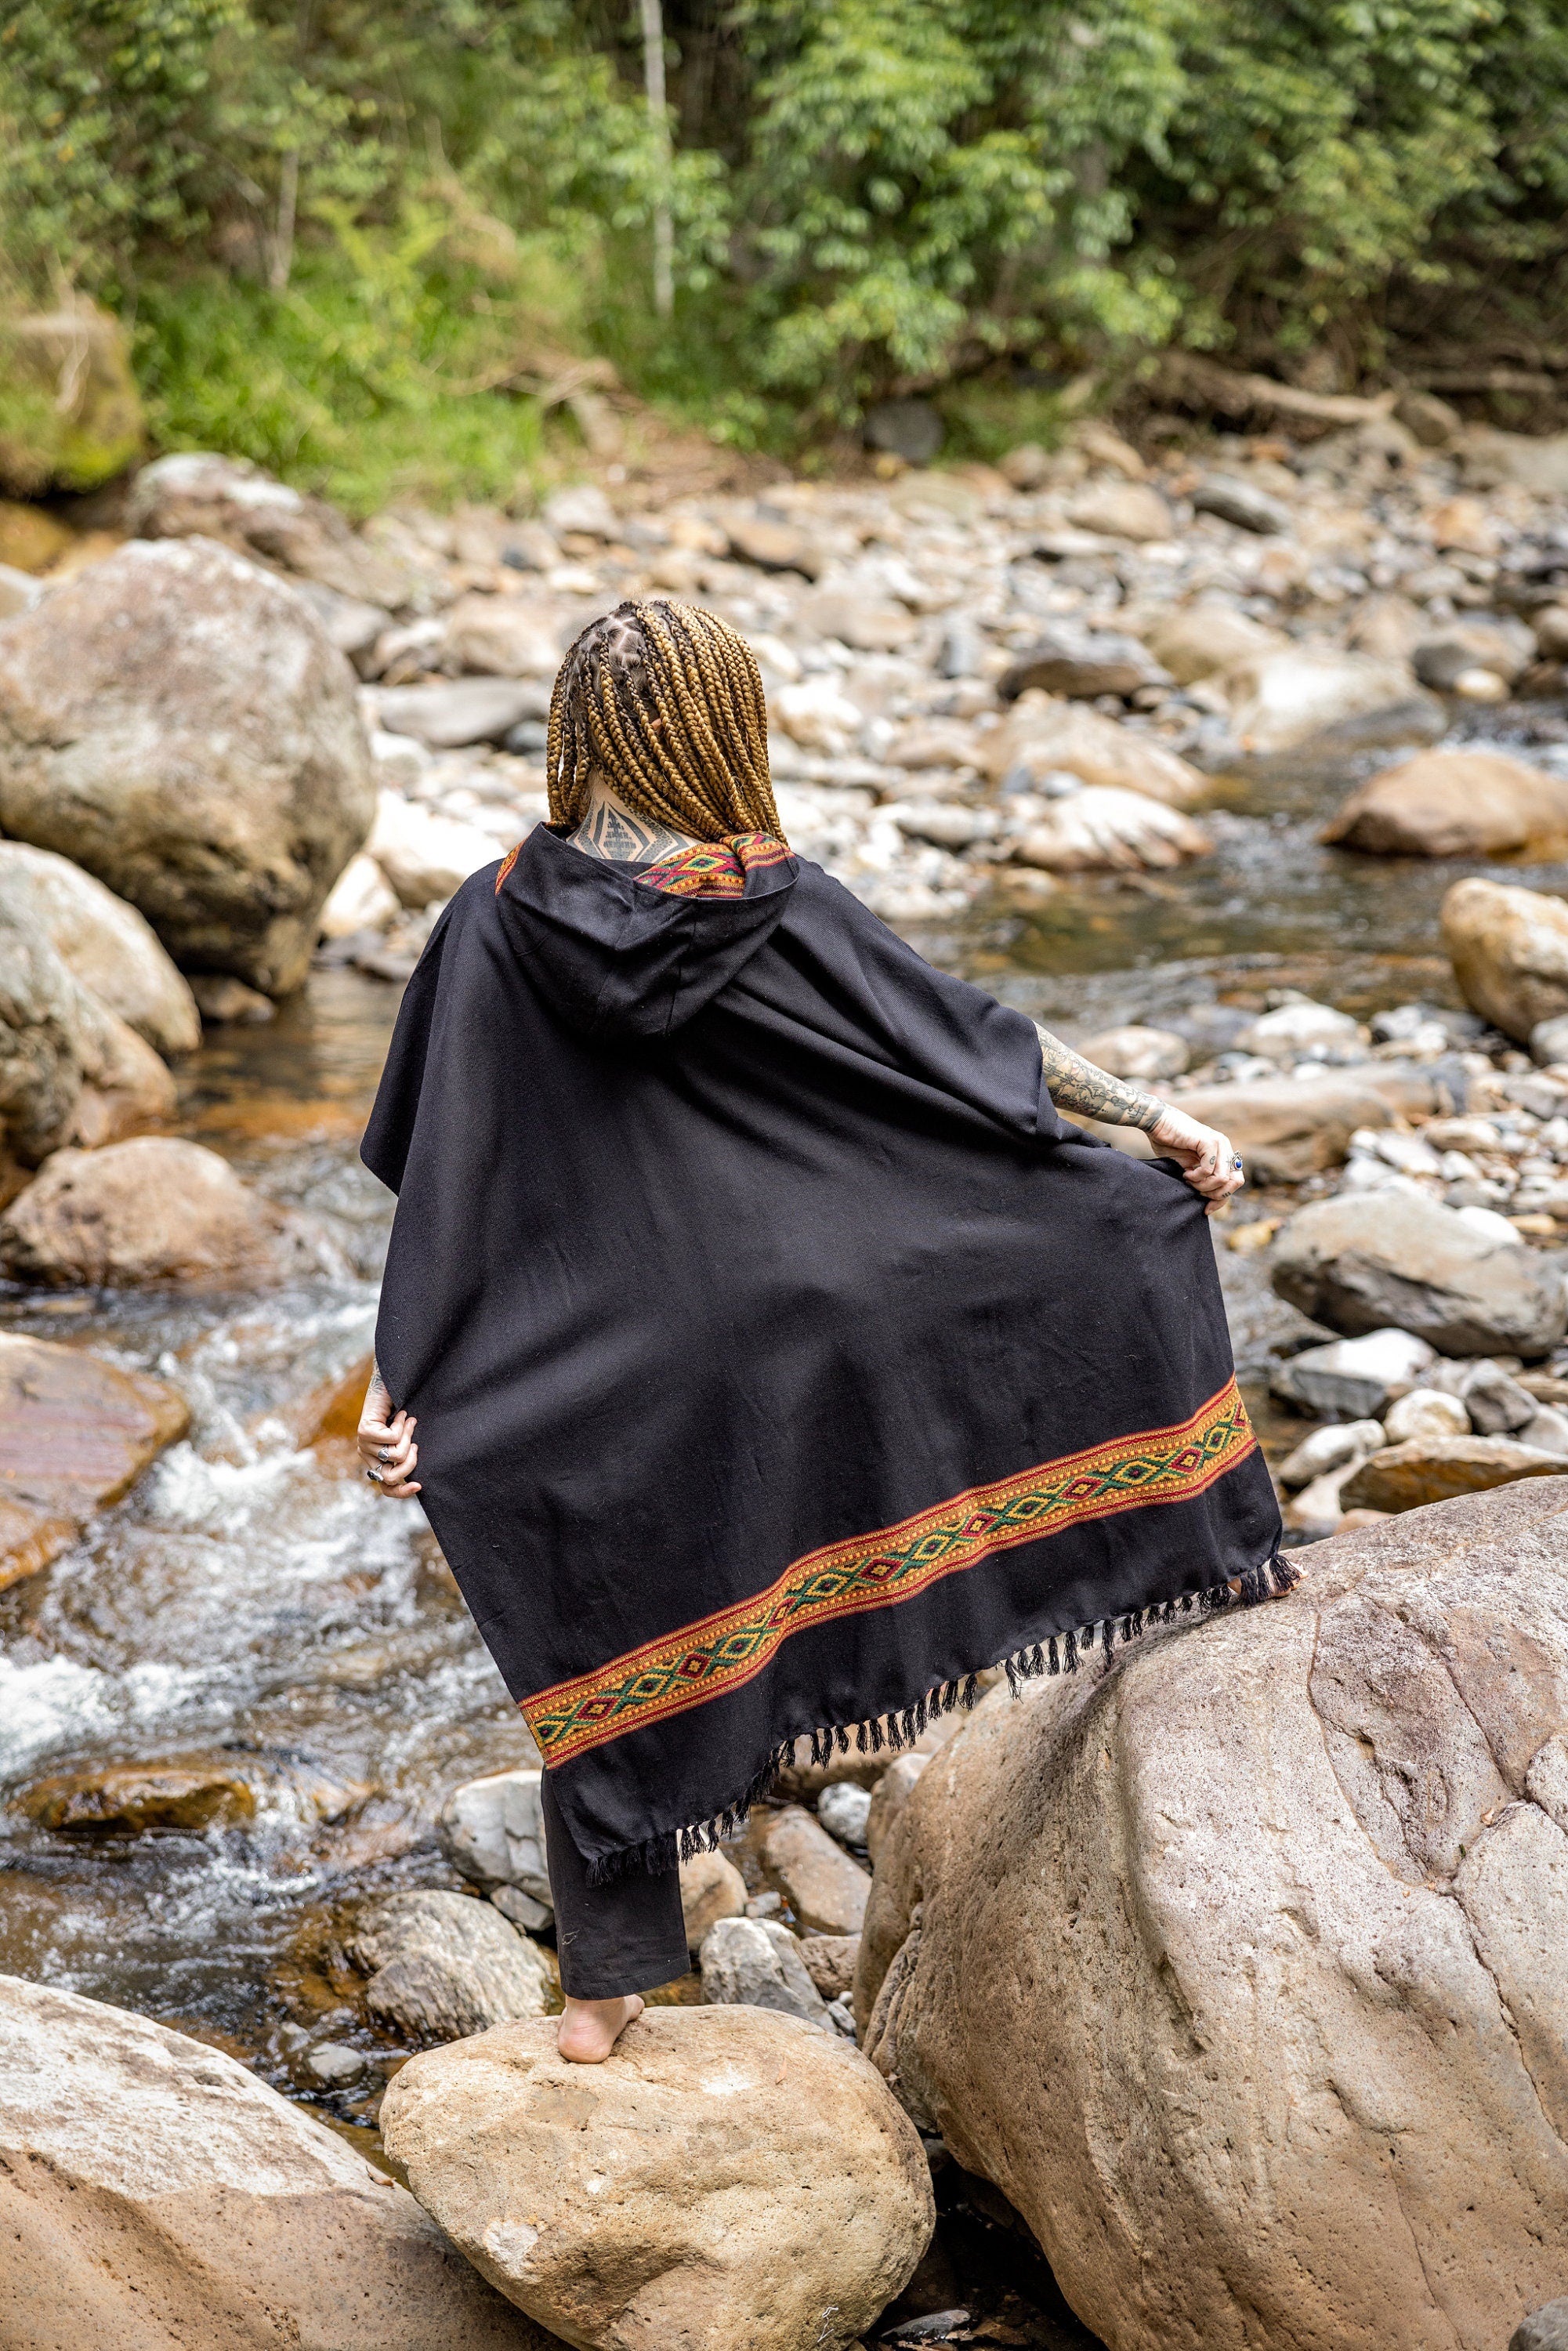 UPEKKHA Womens Black Hooded Poncho Long Cashmere and Acrylic Wool with Tribal Embroidery Large Hood, Pockets Hippie Primitive Boho AJJAYA